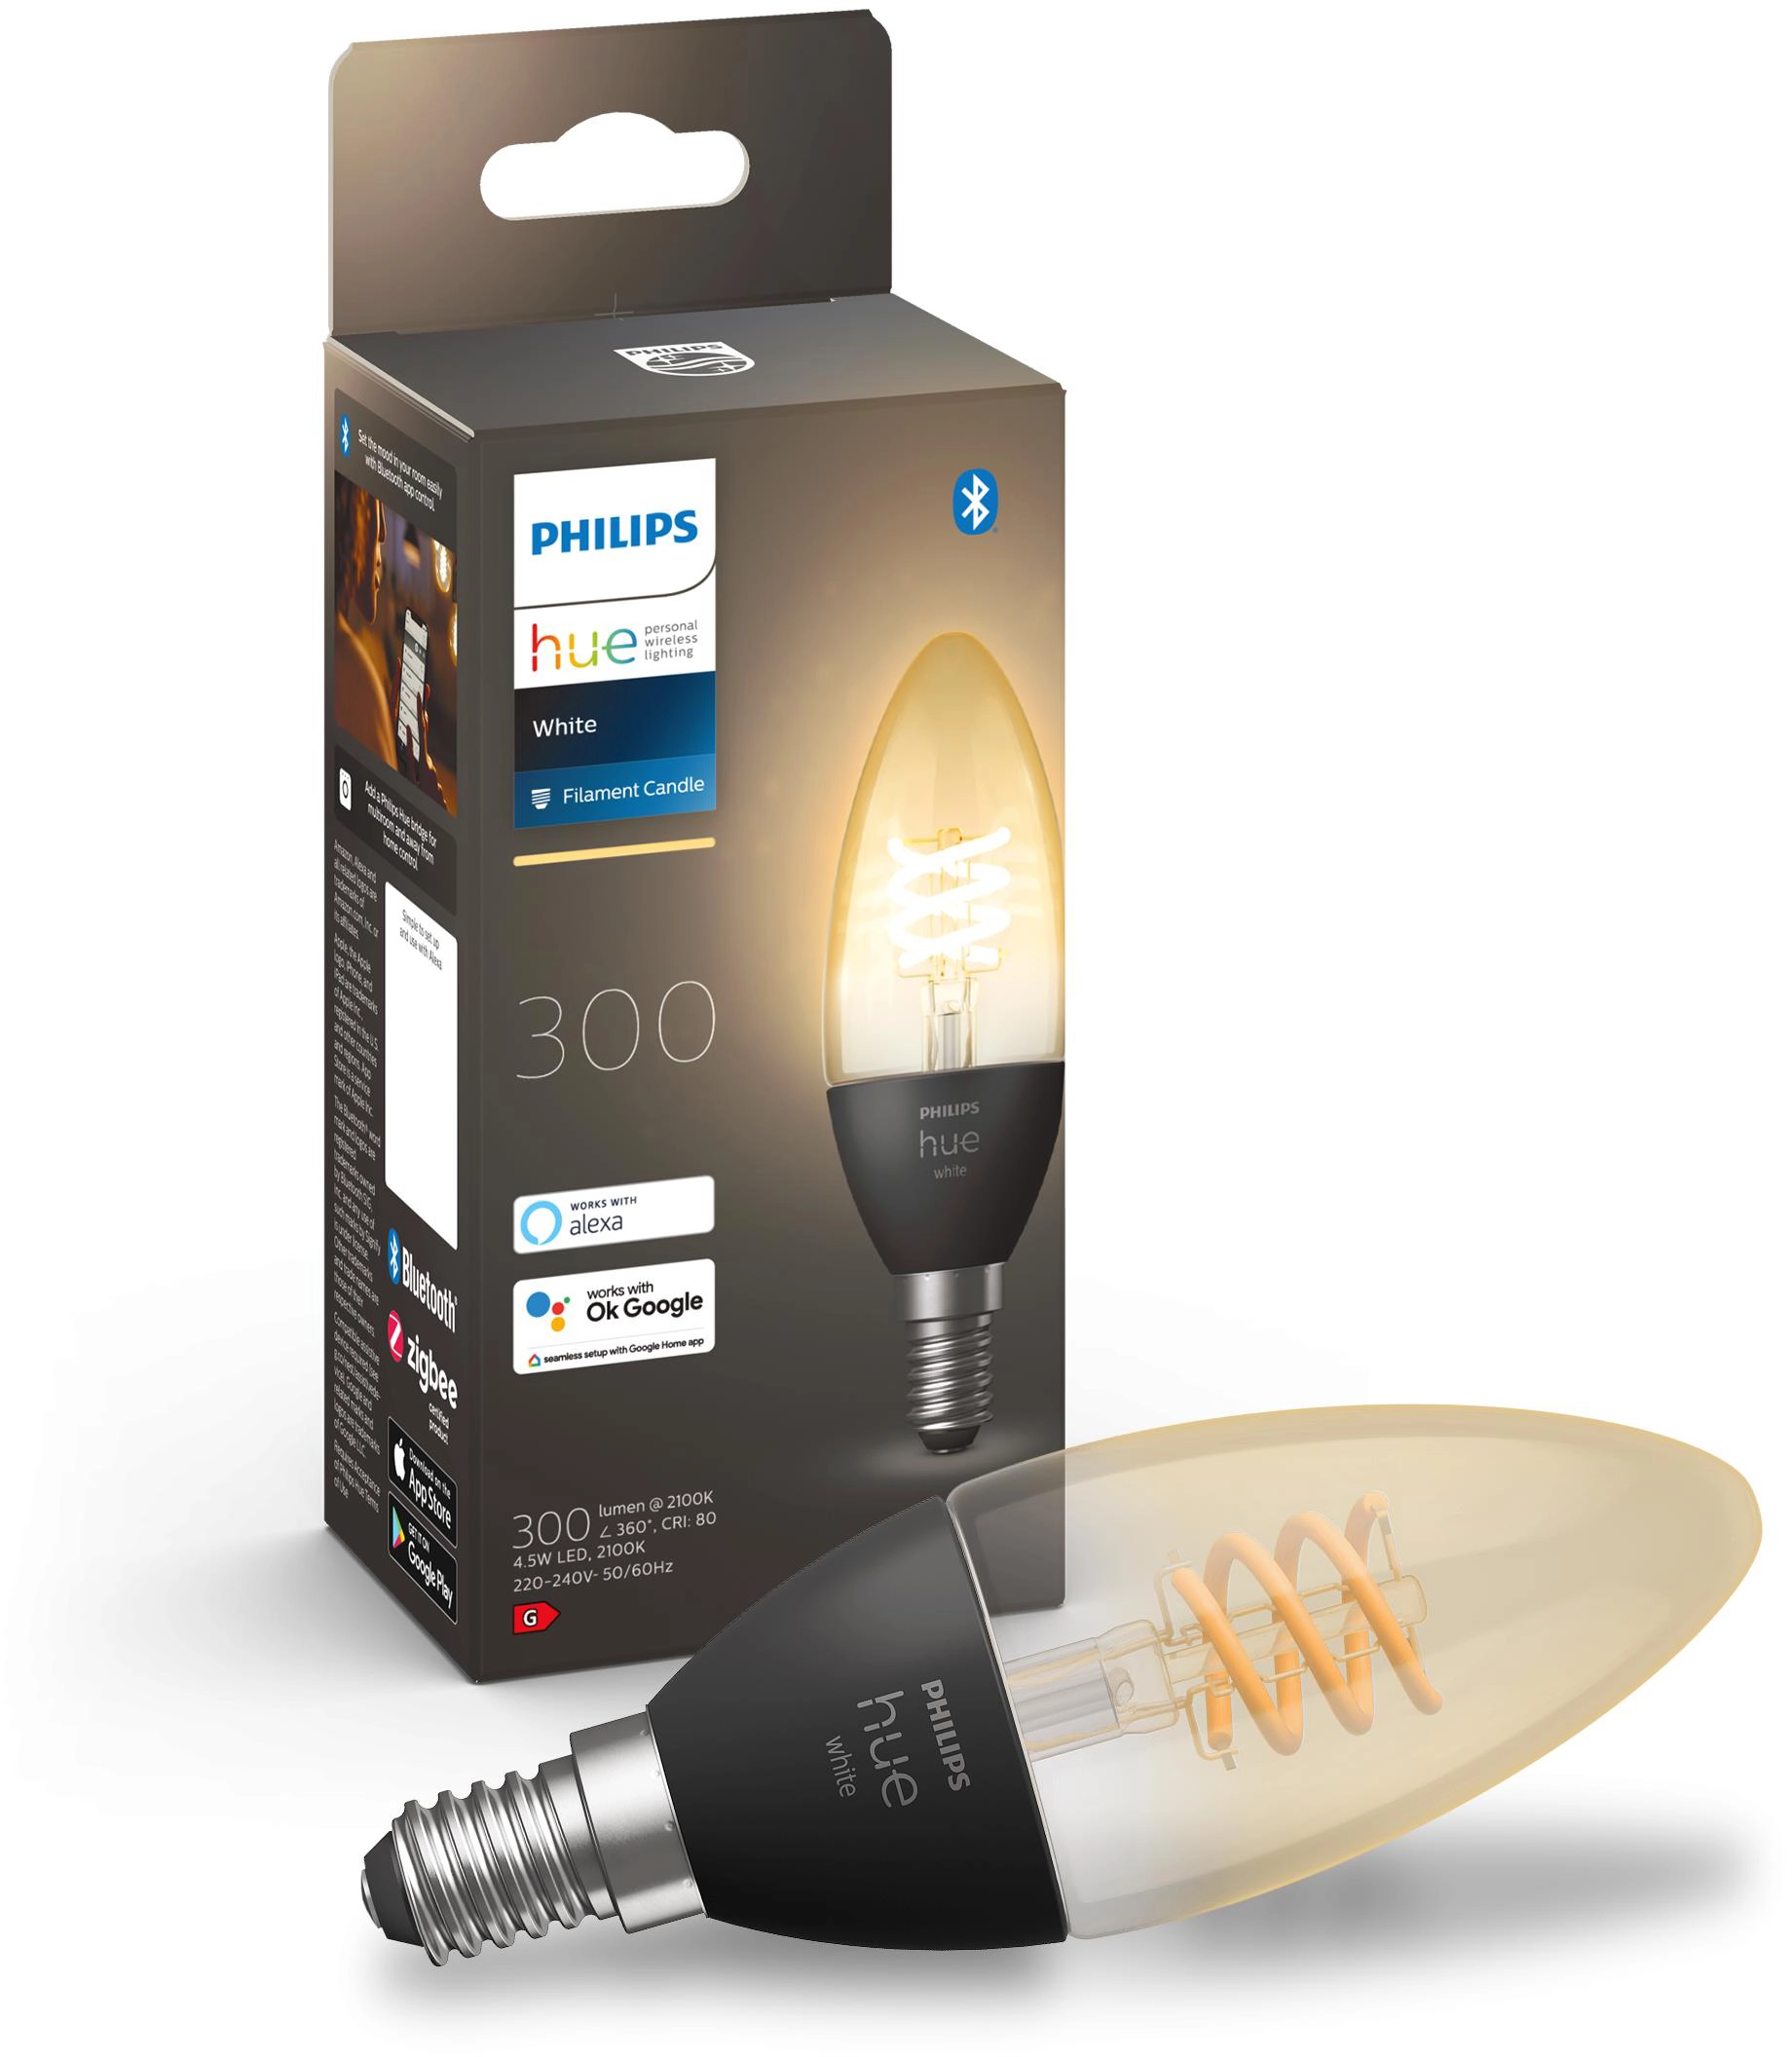 WiZ Ampoule LED Mate forme de bougie E14 Wi-fi Bluetooth 4,8 W / 470 lm